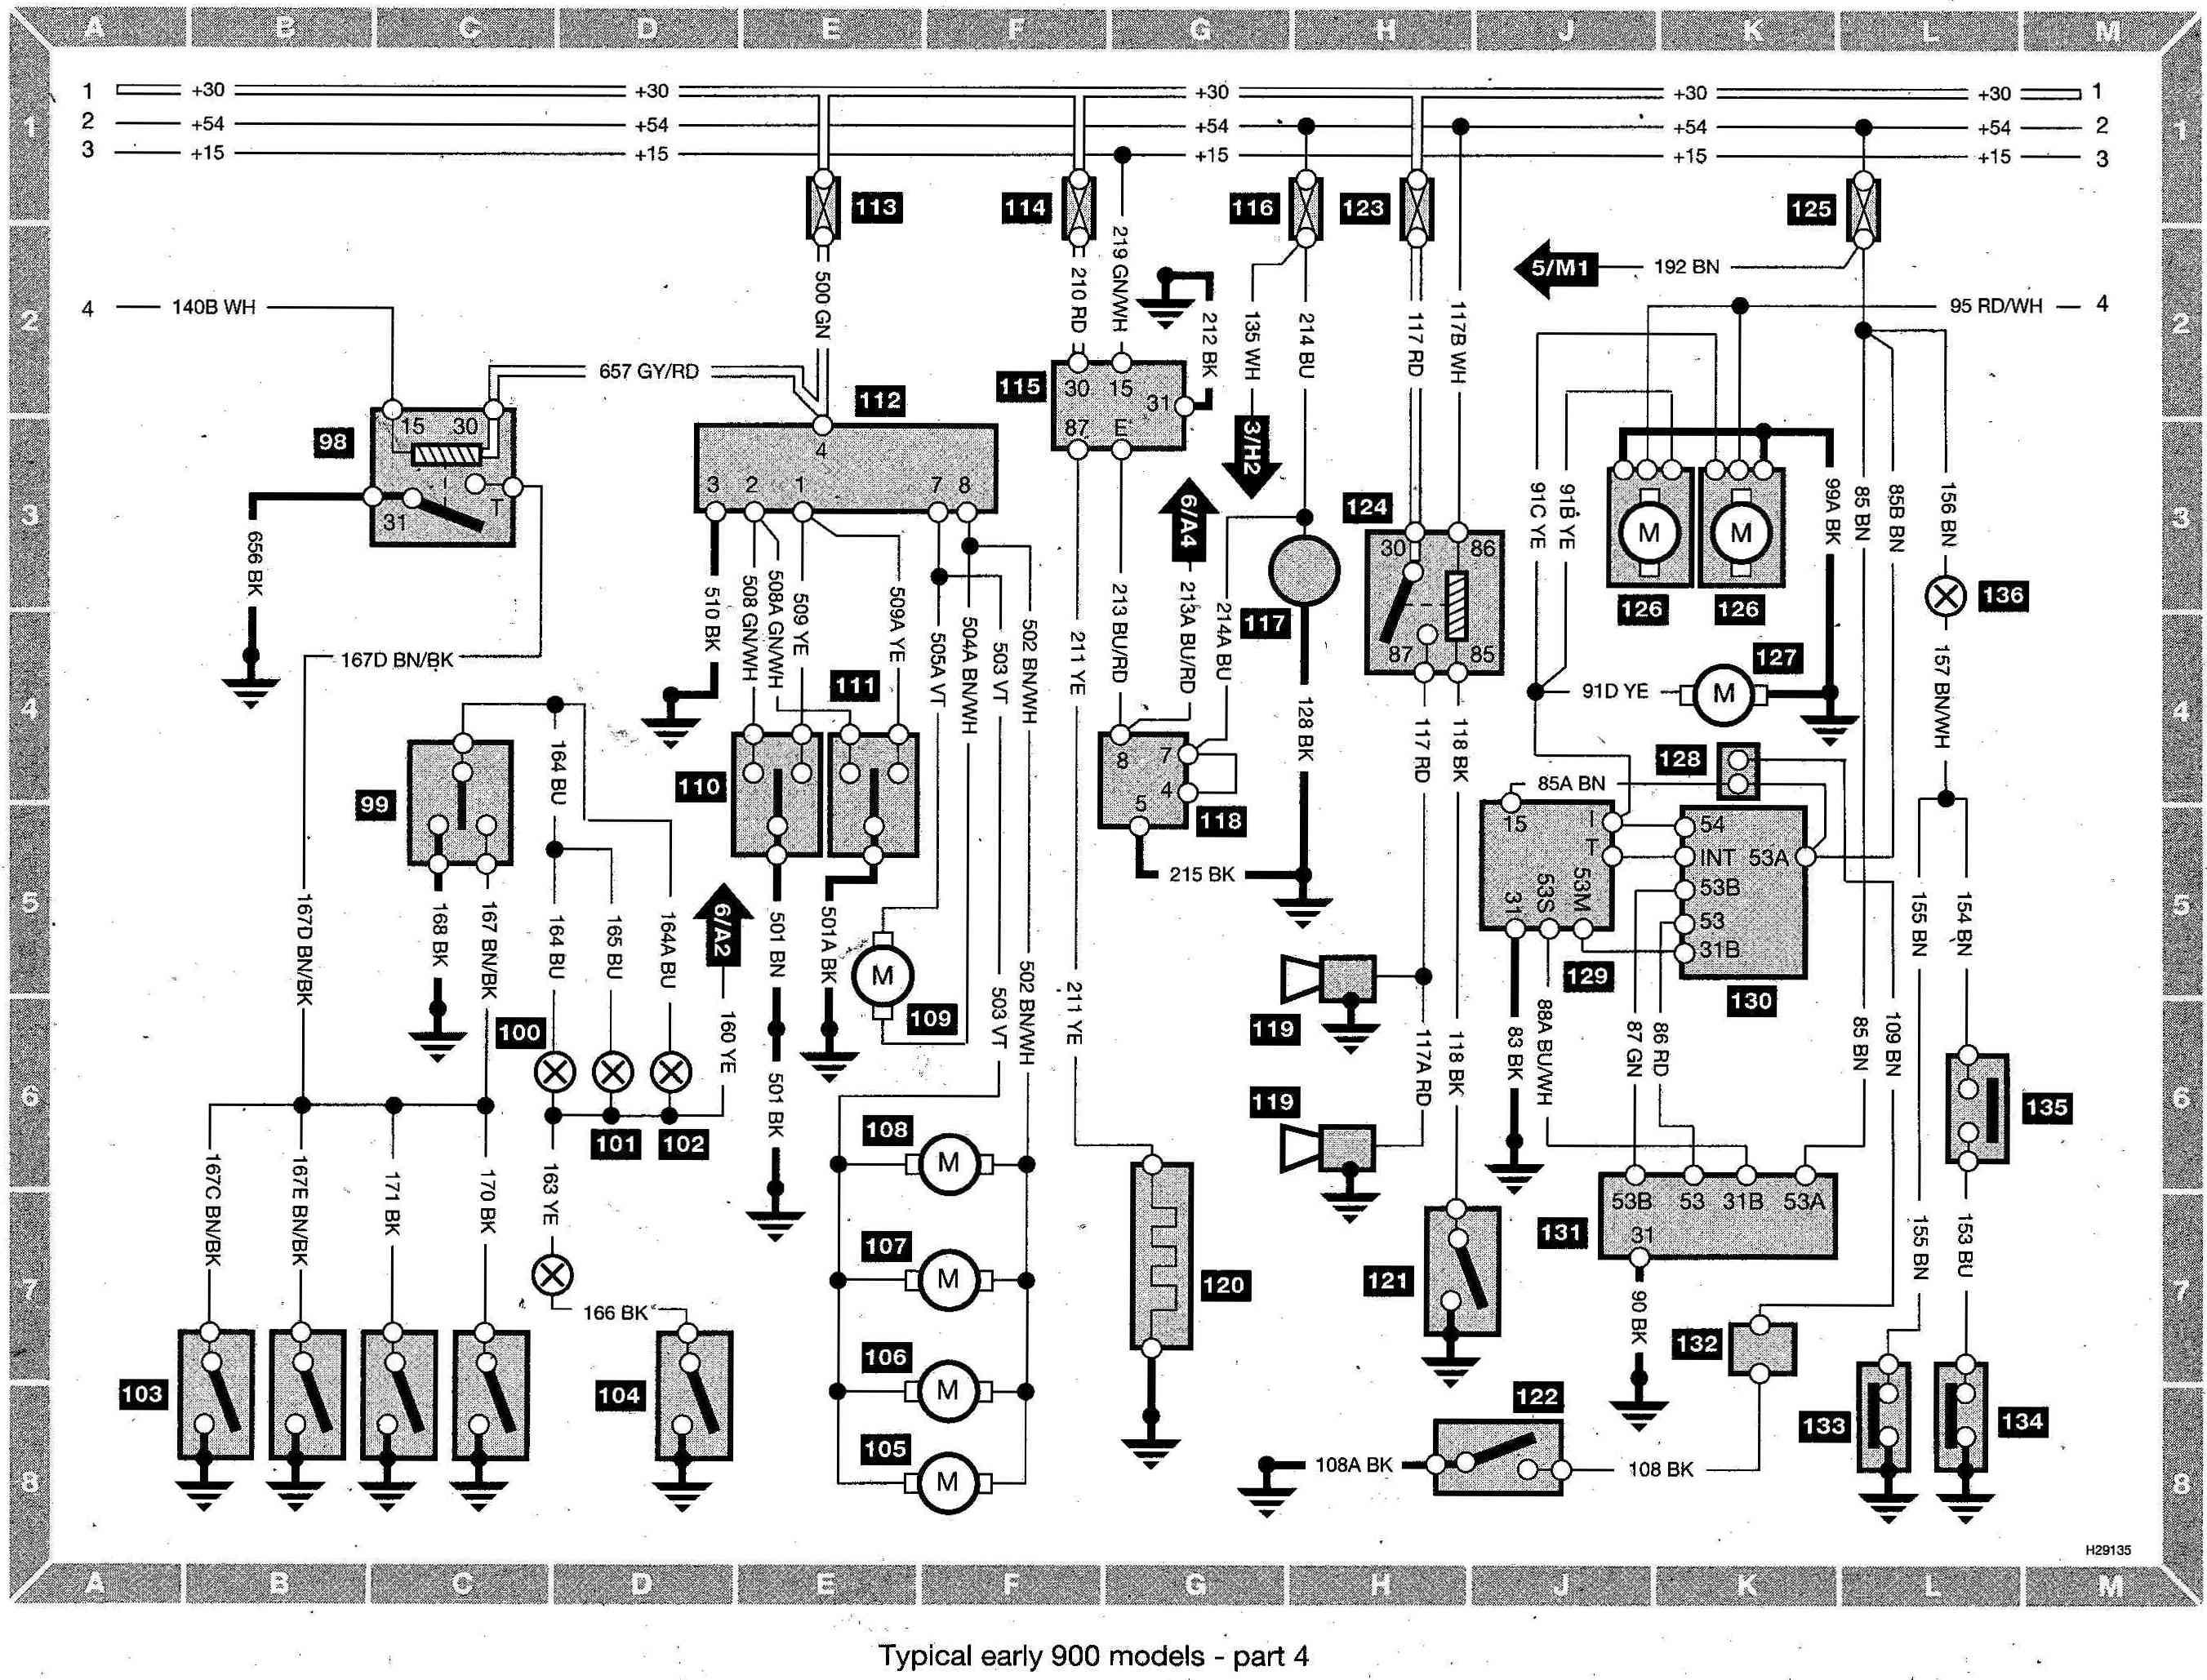 Saab 900 Wiring Diagram - Wiring Diagram